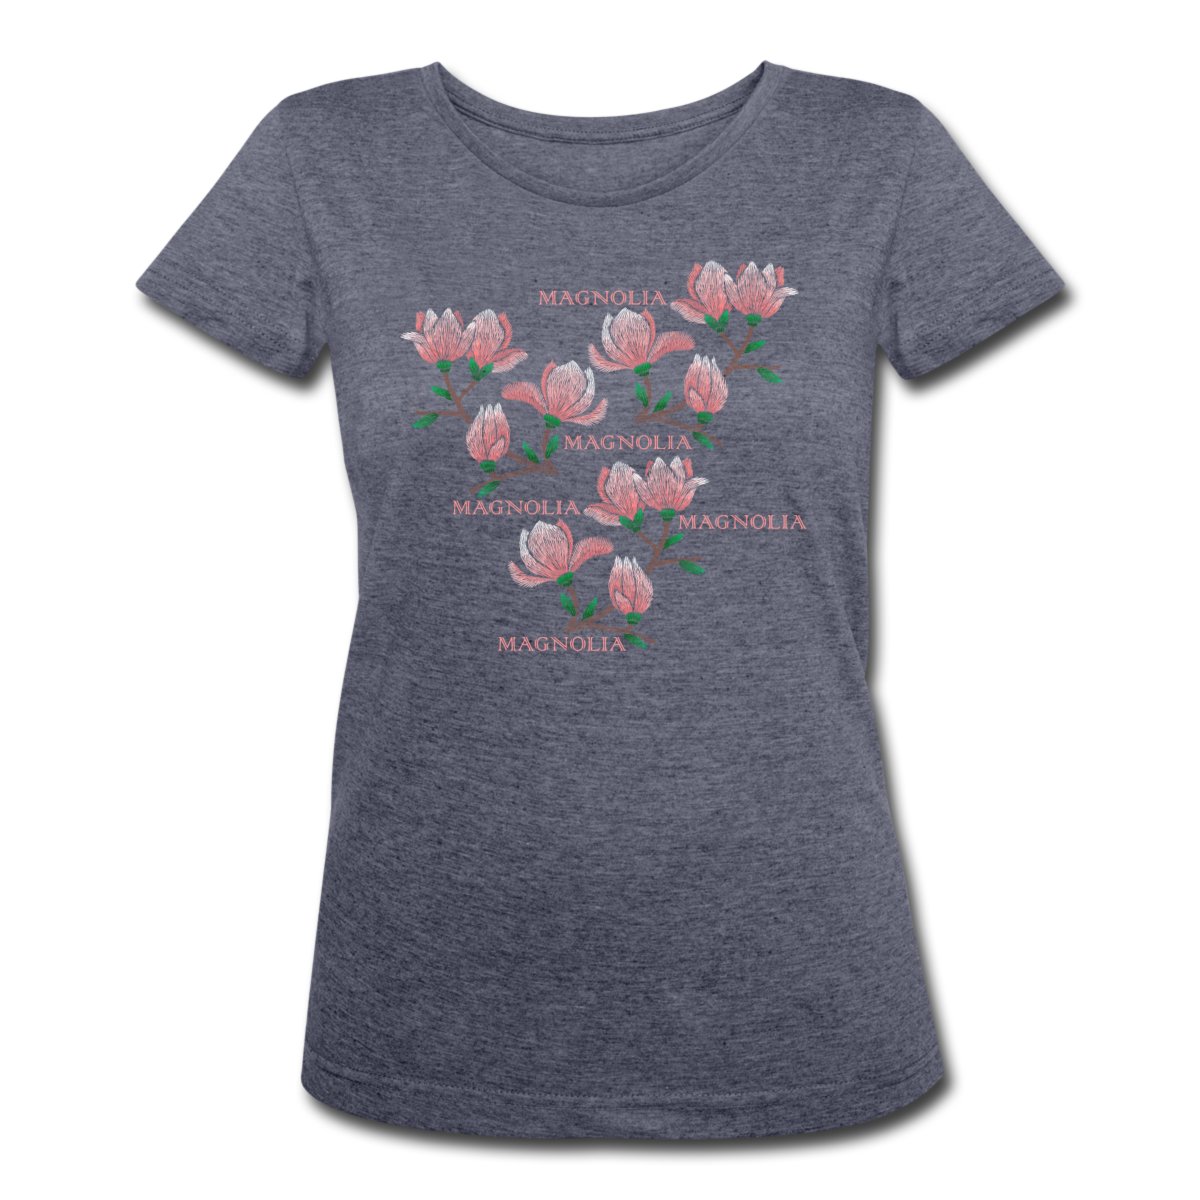 magnolia-polycotton-t-shirt-dam-mb.jpg